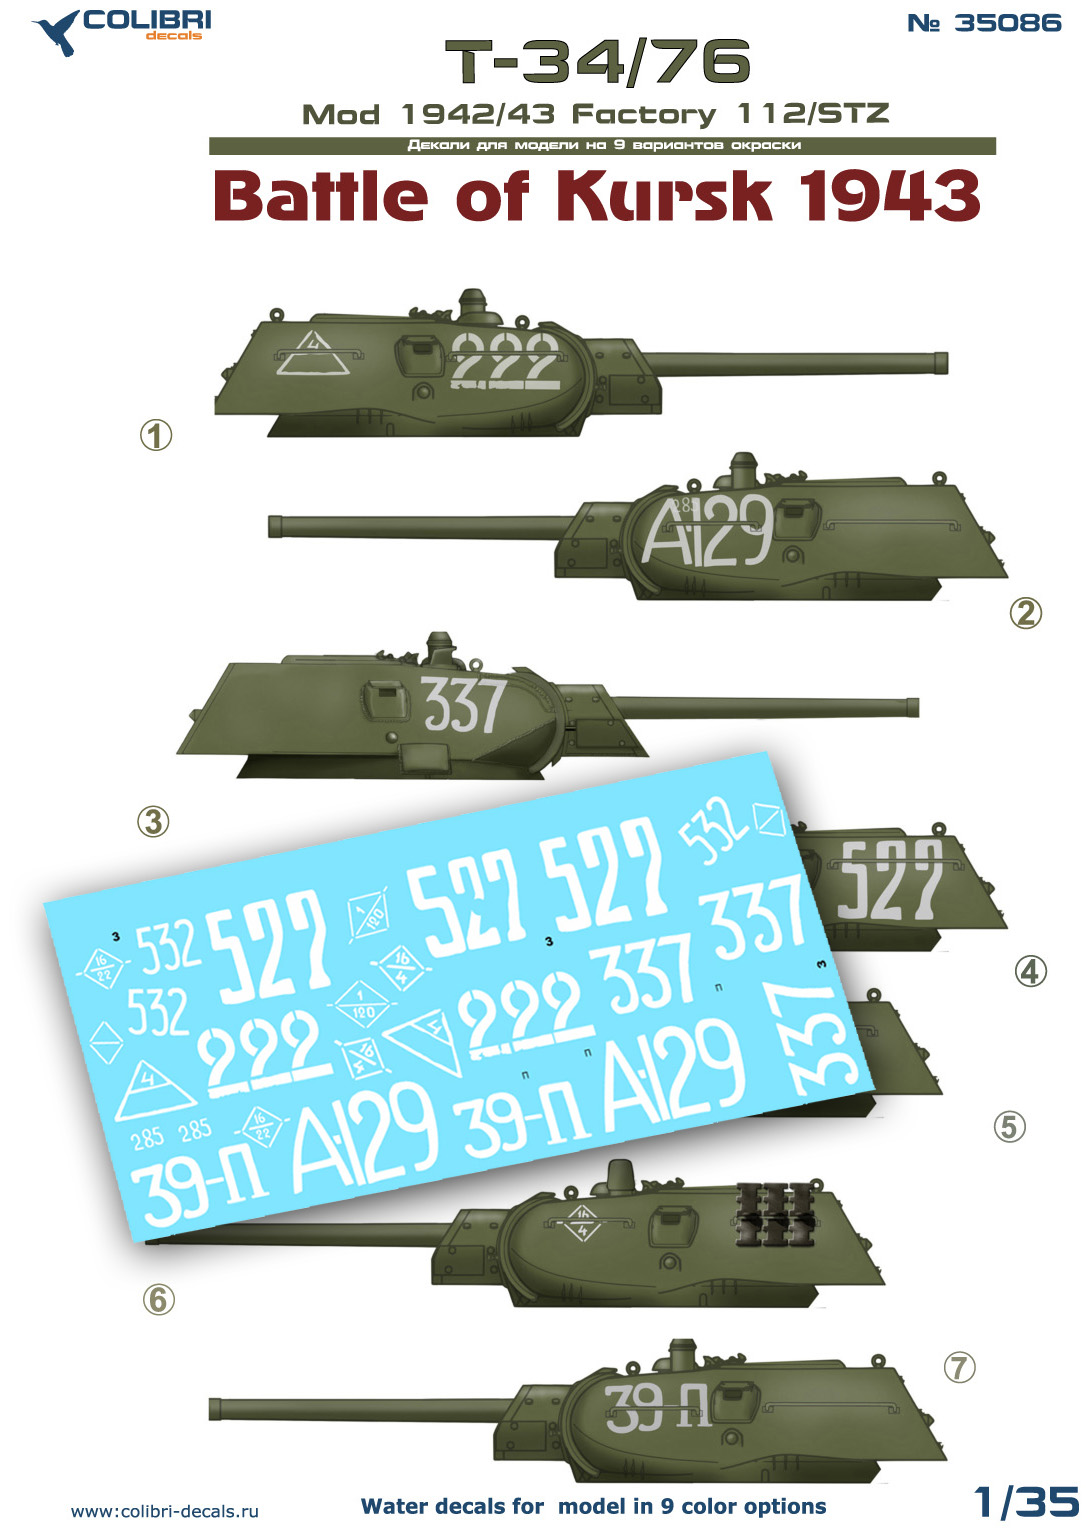 Декаль 1/35 Т-34/76 мod 1942/43 Factory 112/STZ Battle of Kursk 1943 (Colibri Decals)